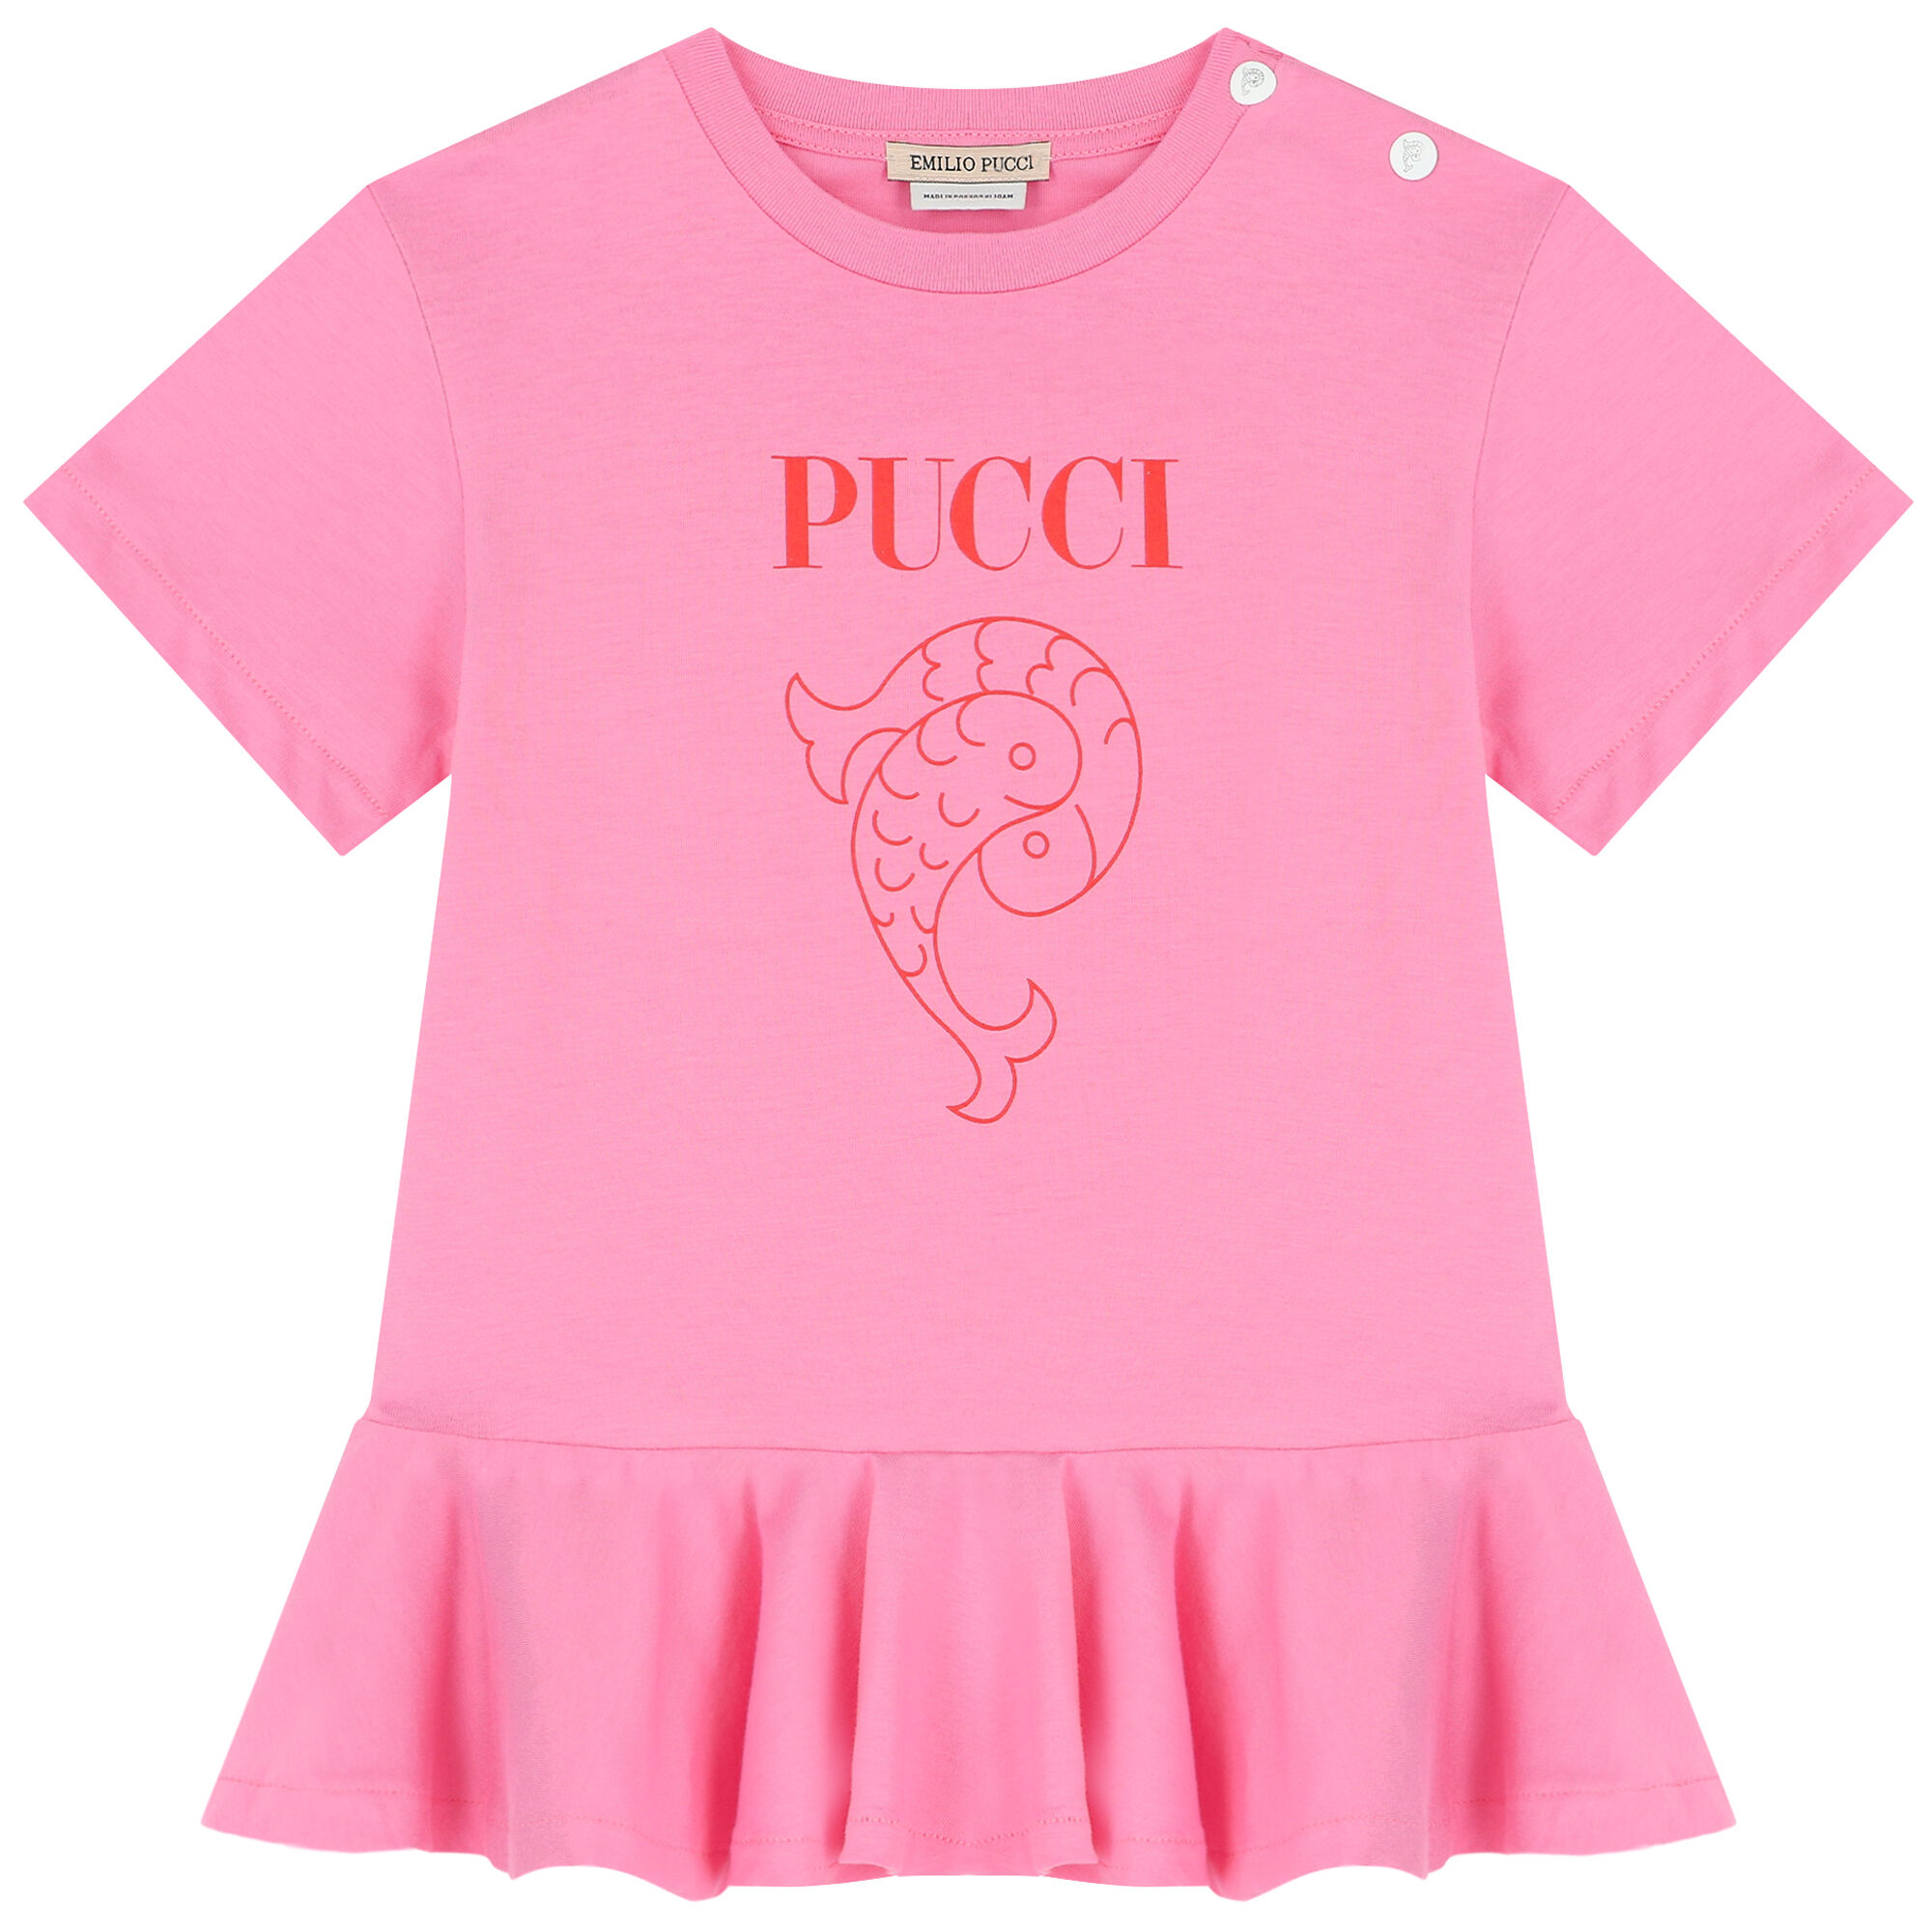 Emilio Pucci Kids | Junior Couture USA